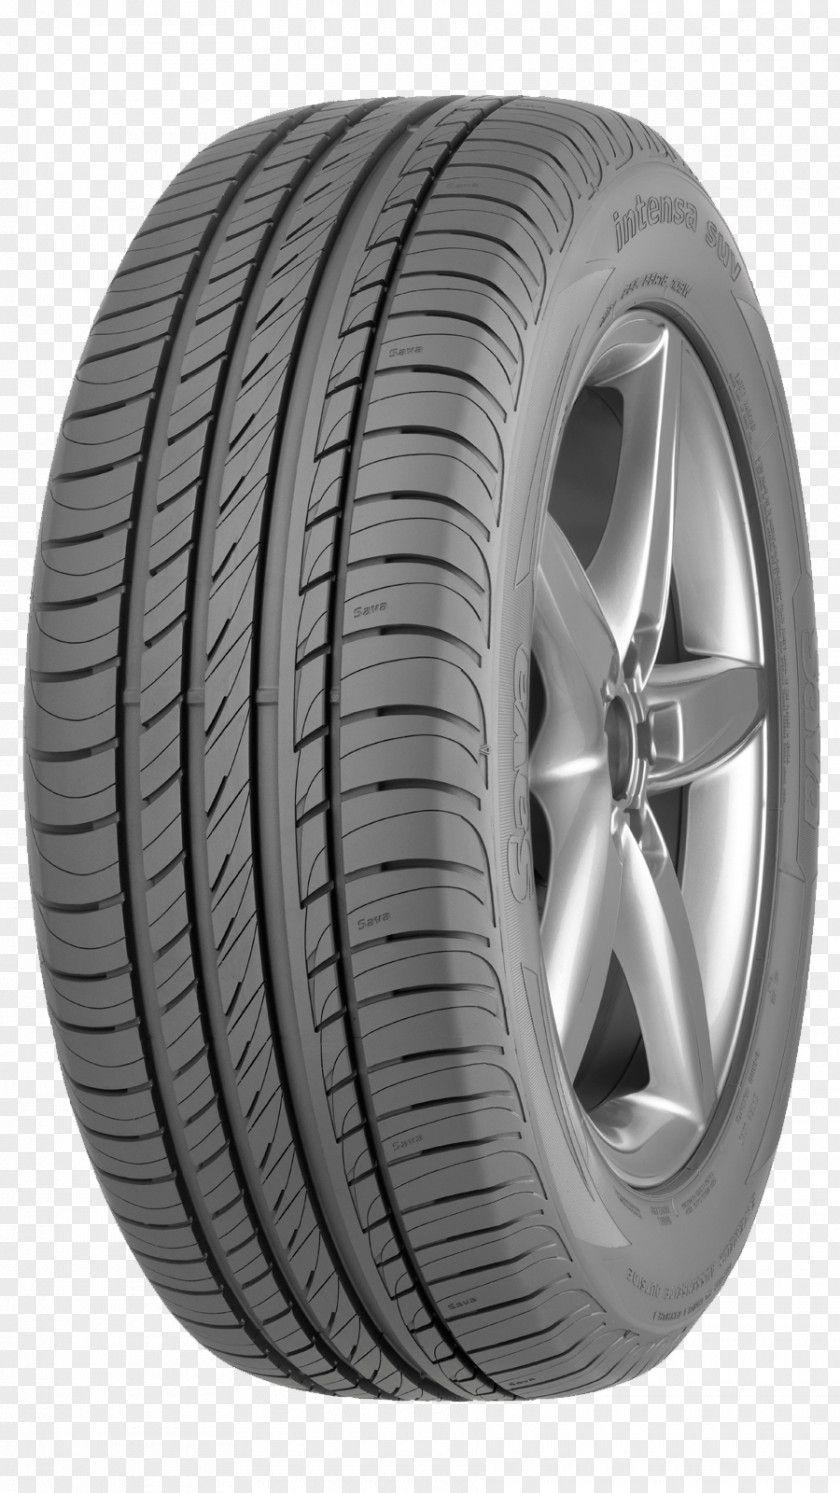 Tires Car Sport Utility Vehicle Goodyear Dunlop Sava PNG